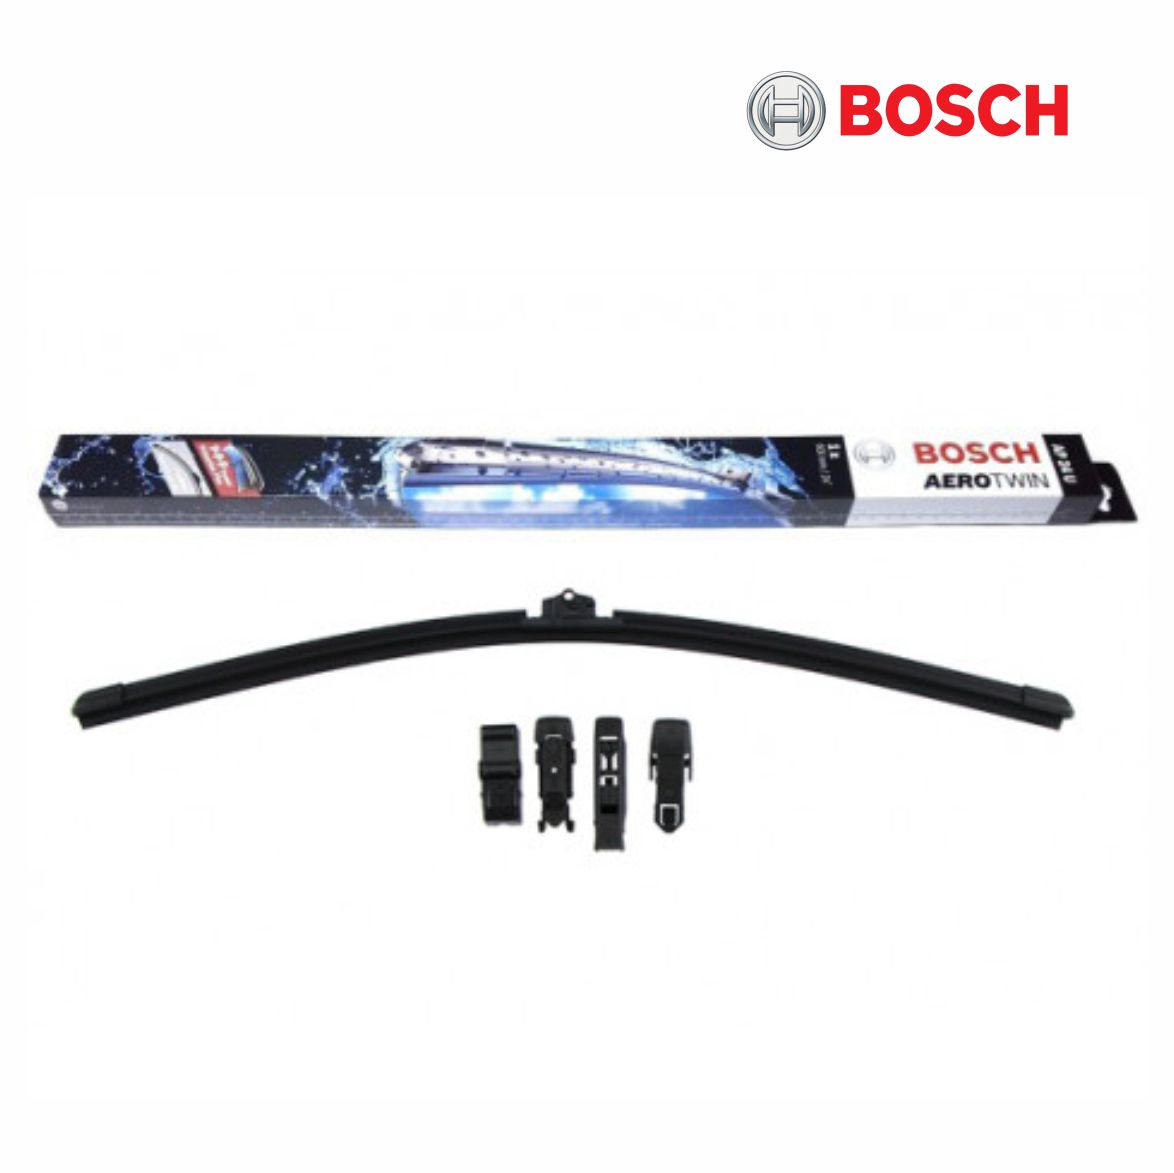 Bosch AeroFit Plus (Multiacoples)